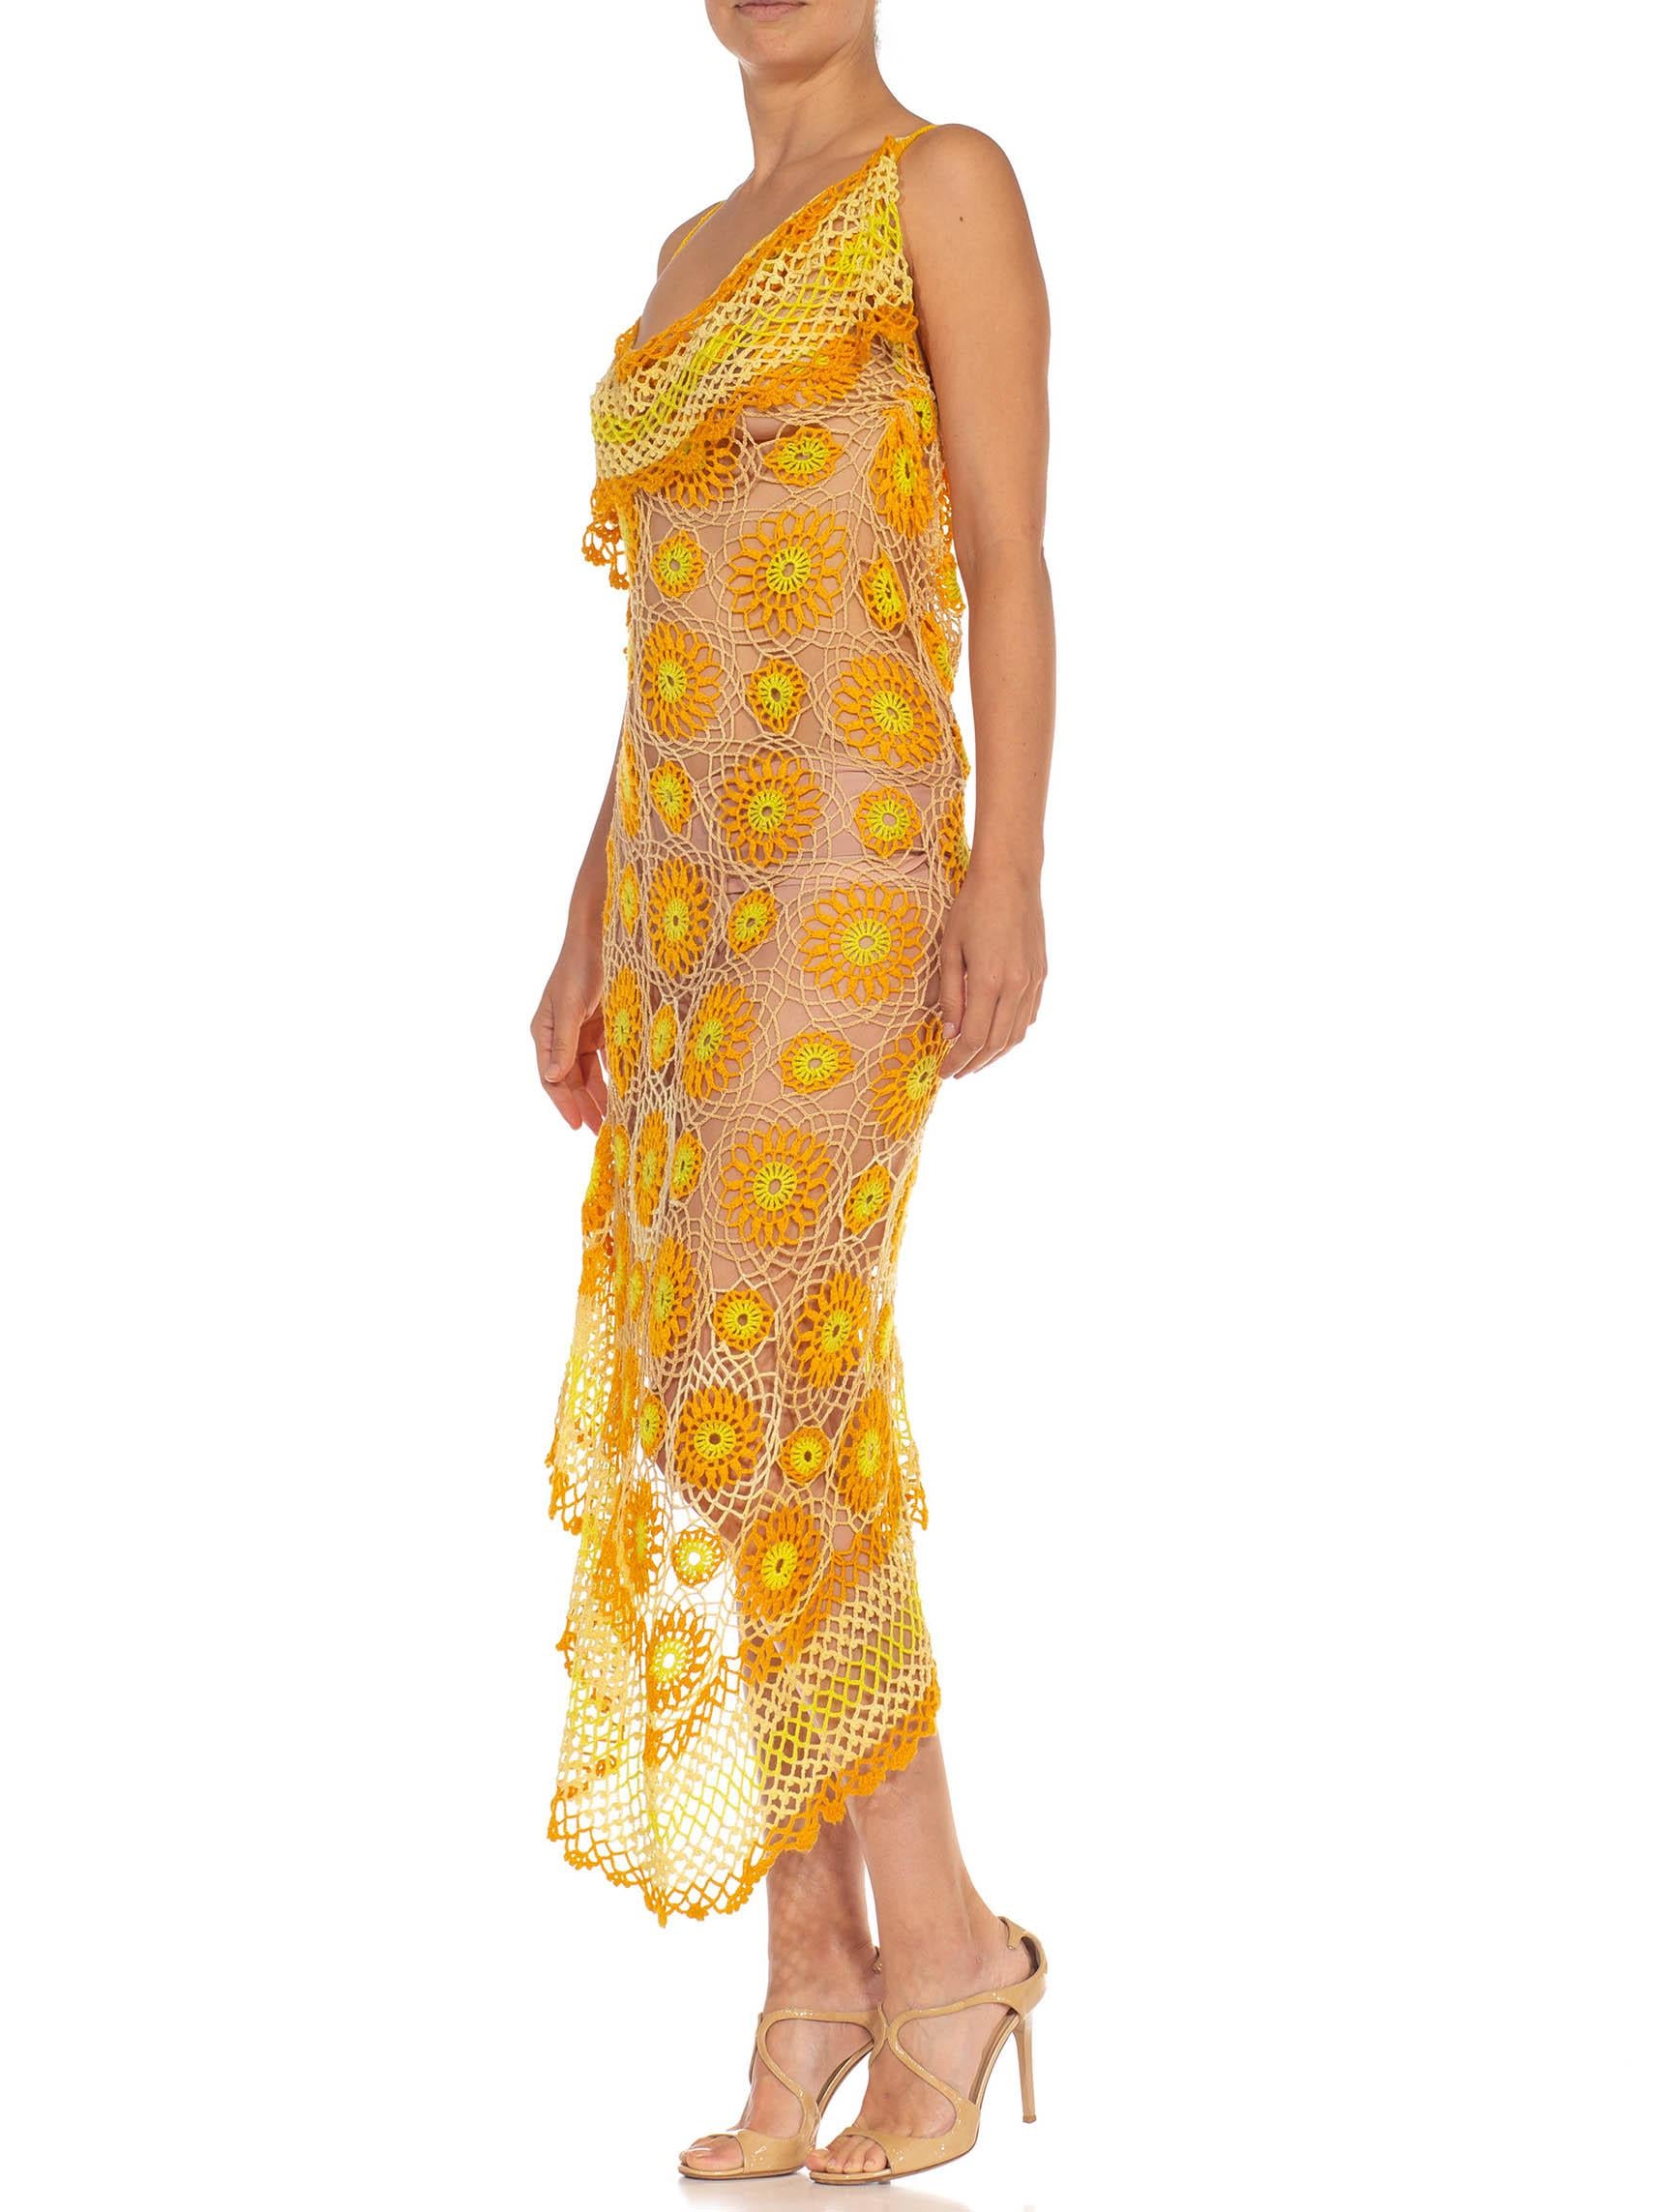 Morphew Collection Orange Yellow & White Cotton Floral Crochet Sexy Dress 5